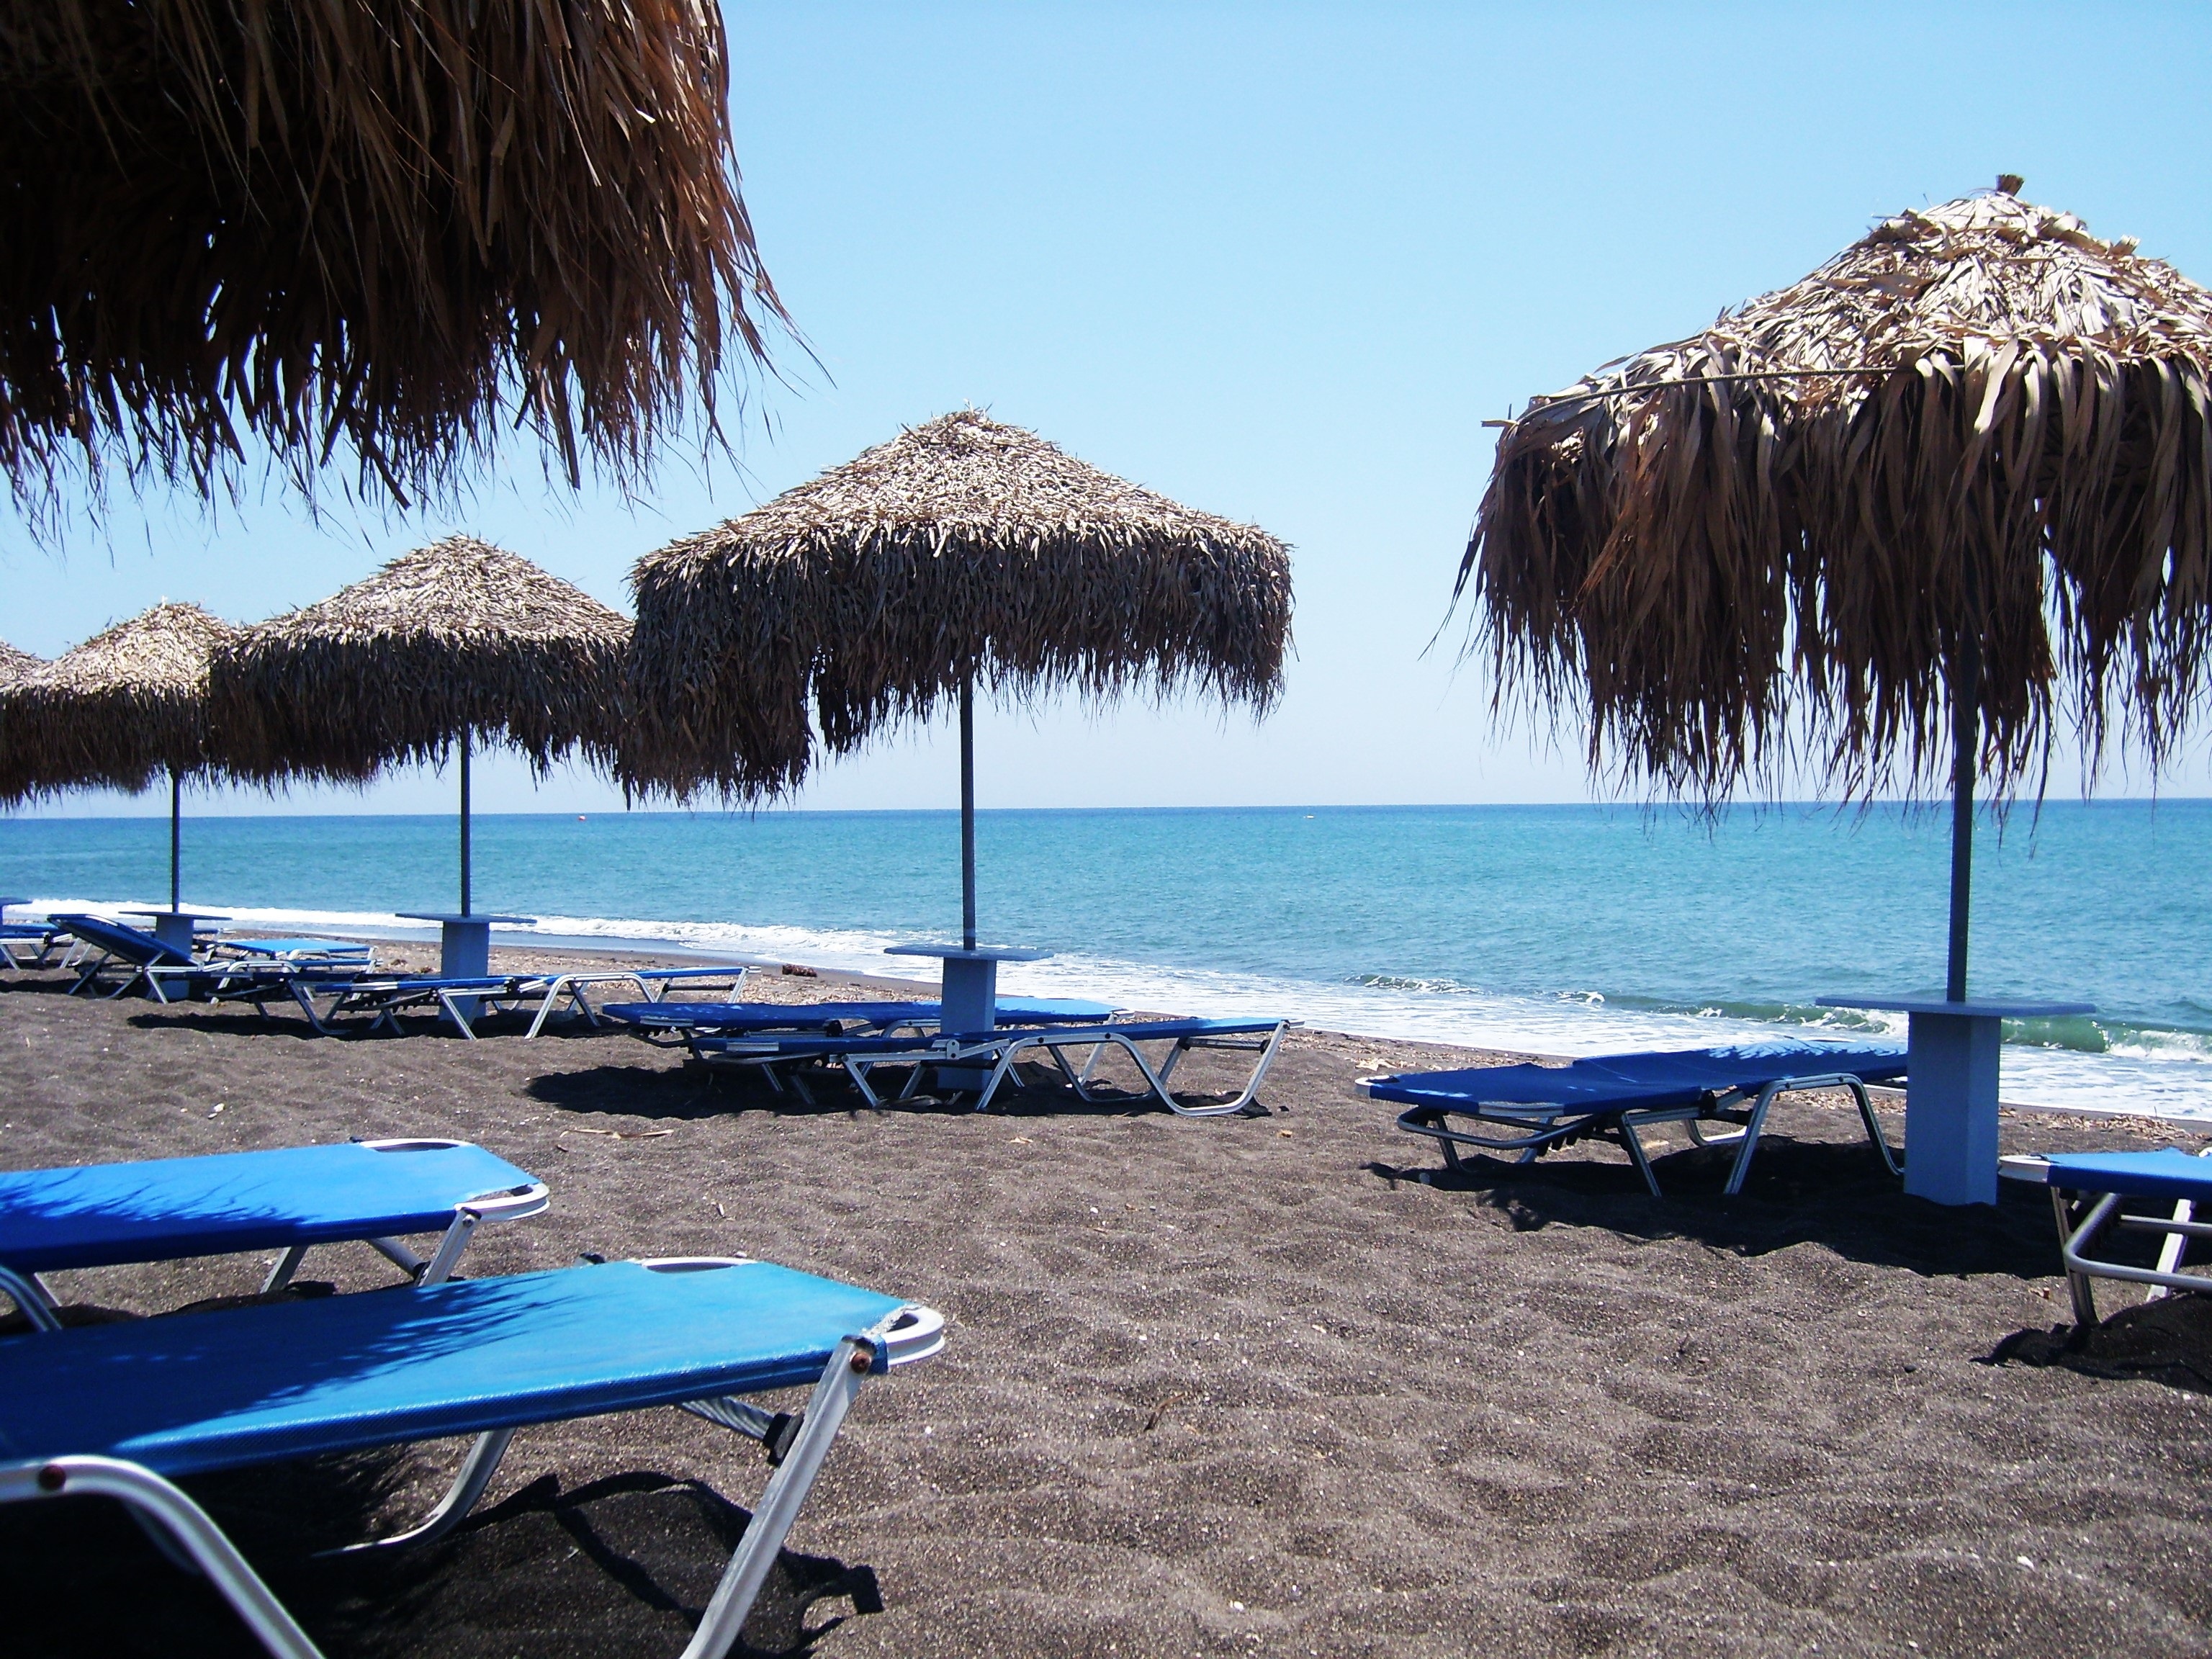 Black sand beach, boat rental in greece